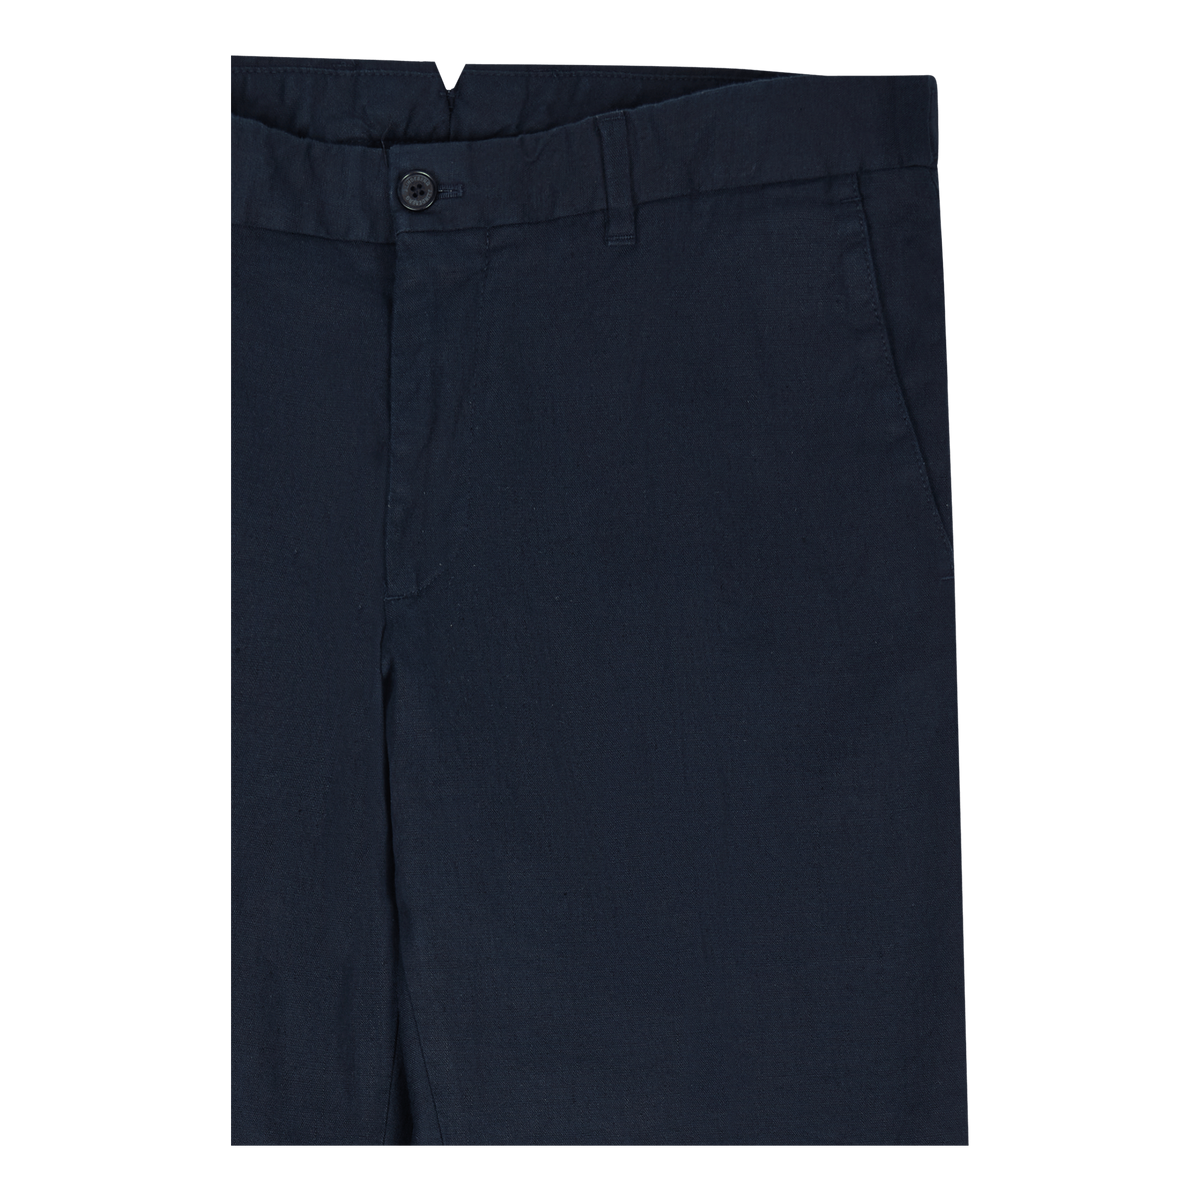 Grant Linen Stretch Pants 6855 Jl Navy